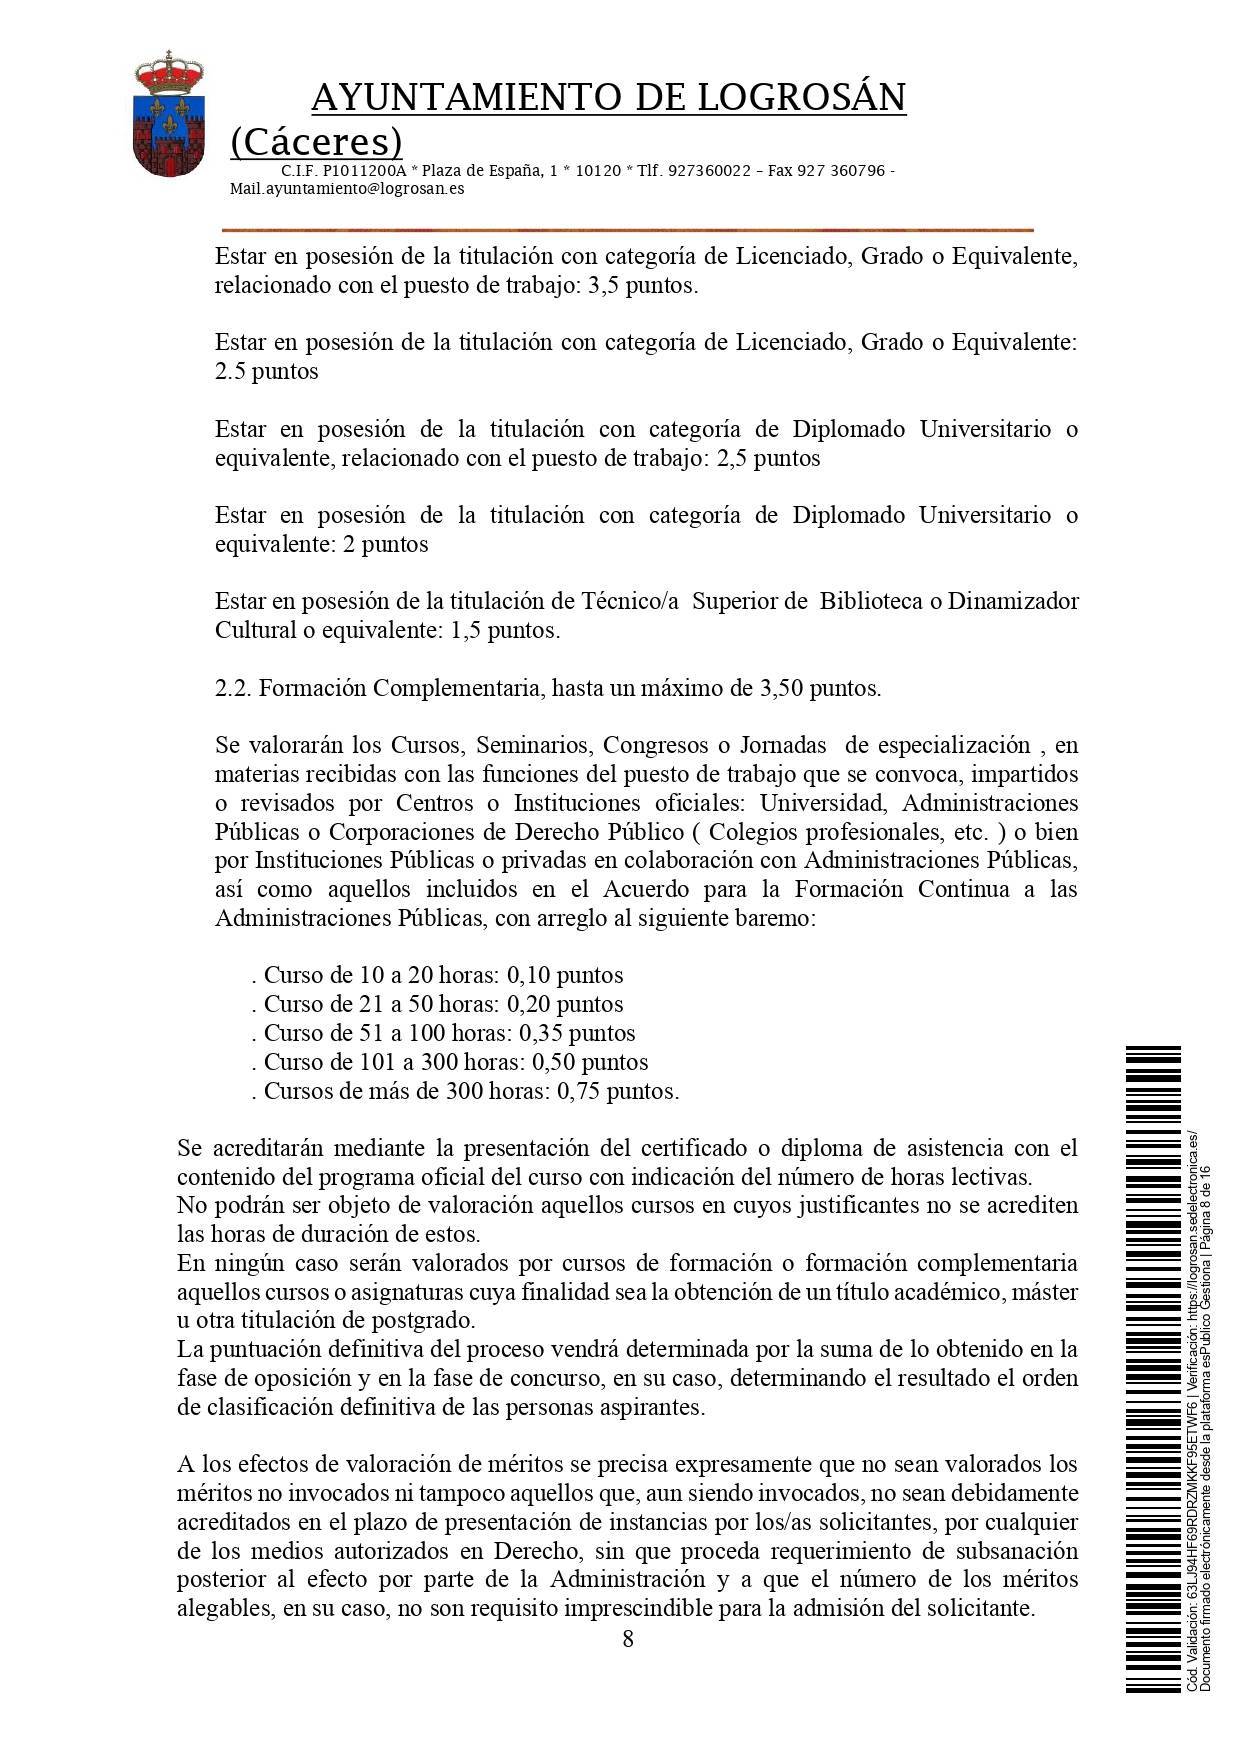 Técnicos-as auxiliar de biblioteca y dinamizador-a cultural (2021) - Logrosán (Cáceres) 8